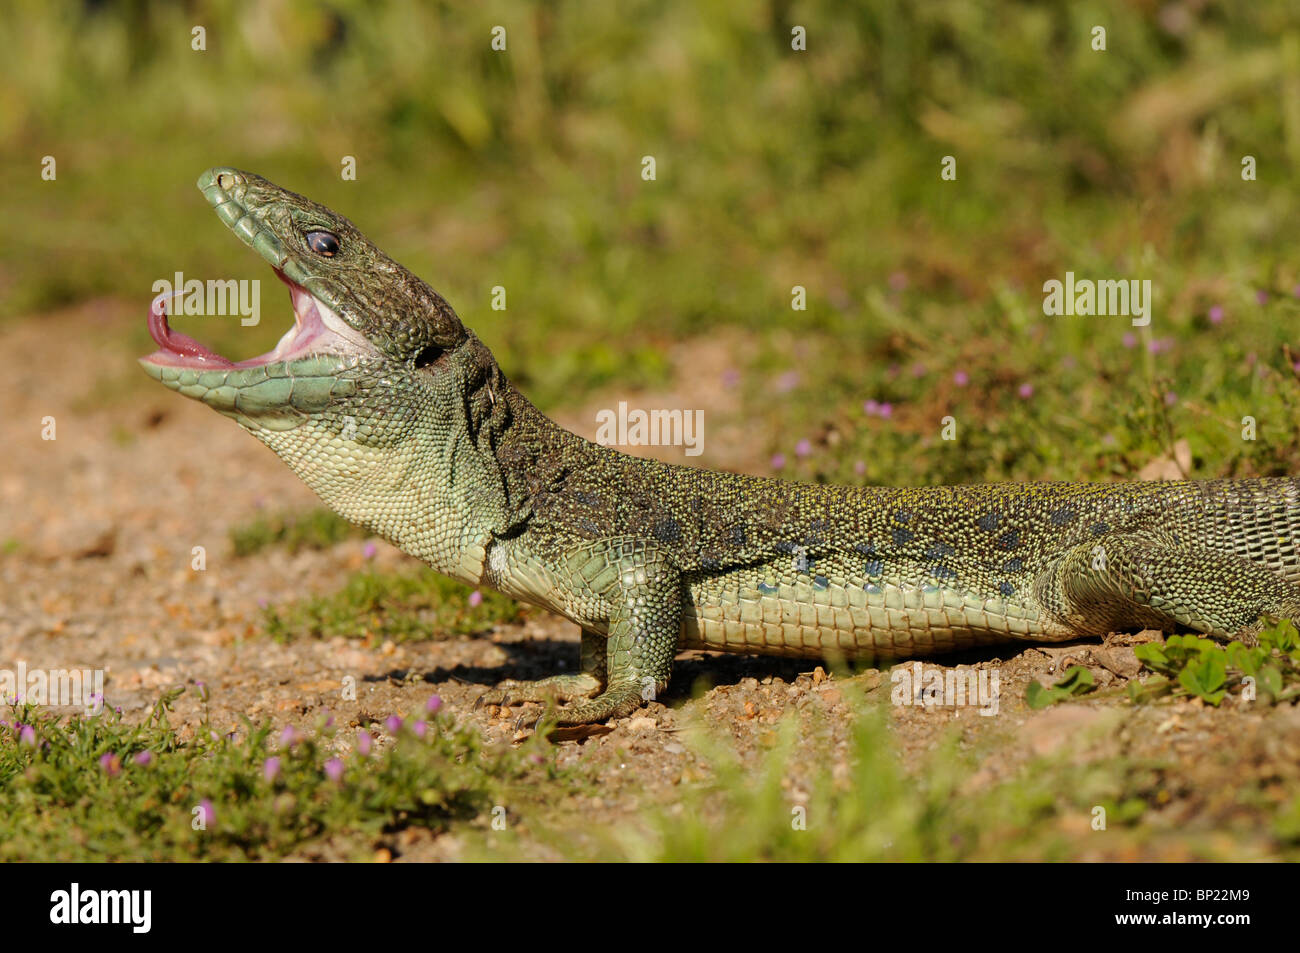 Ocellated lizard, ocellated ramarro, eyed lizard, jewelled lizard (Lacerta lepida), yawining, Spagna Estremadura, Monfragu Foto Stock